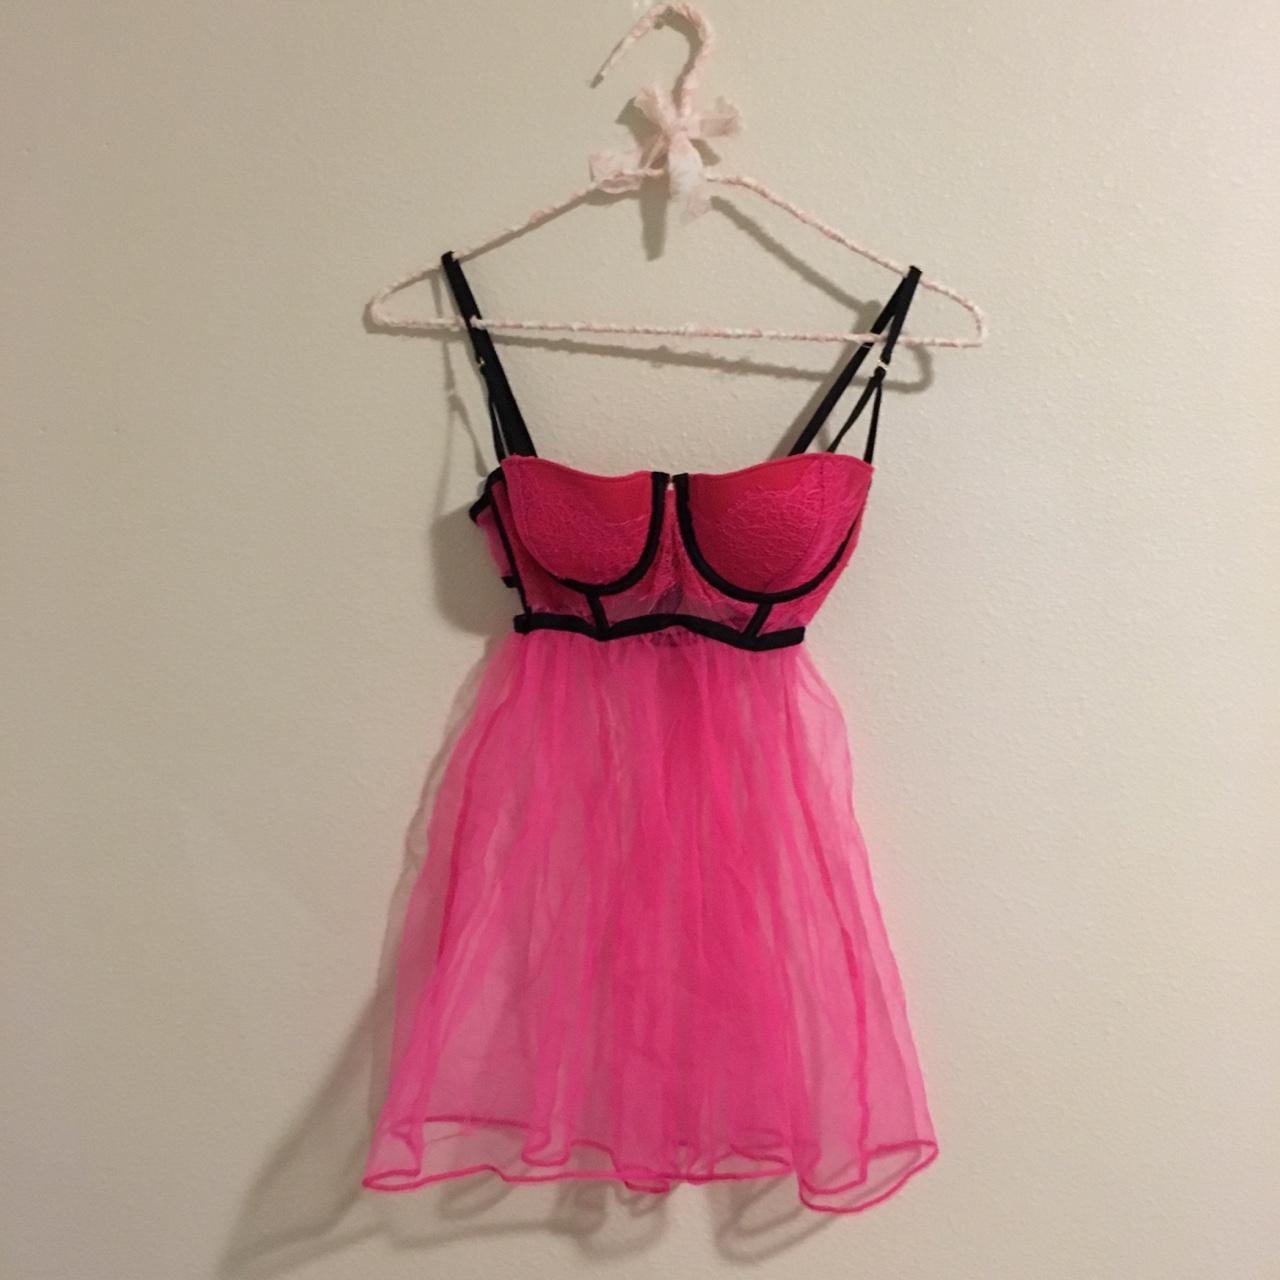 🌸 Victoria's Secret babydoll set 🌸, - NWT, - hot pink